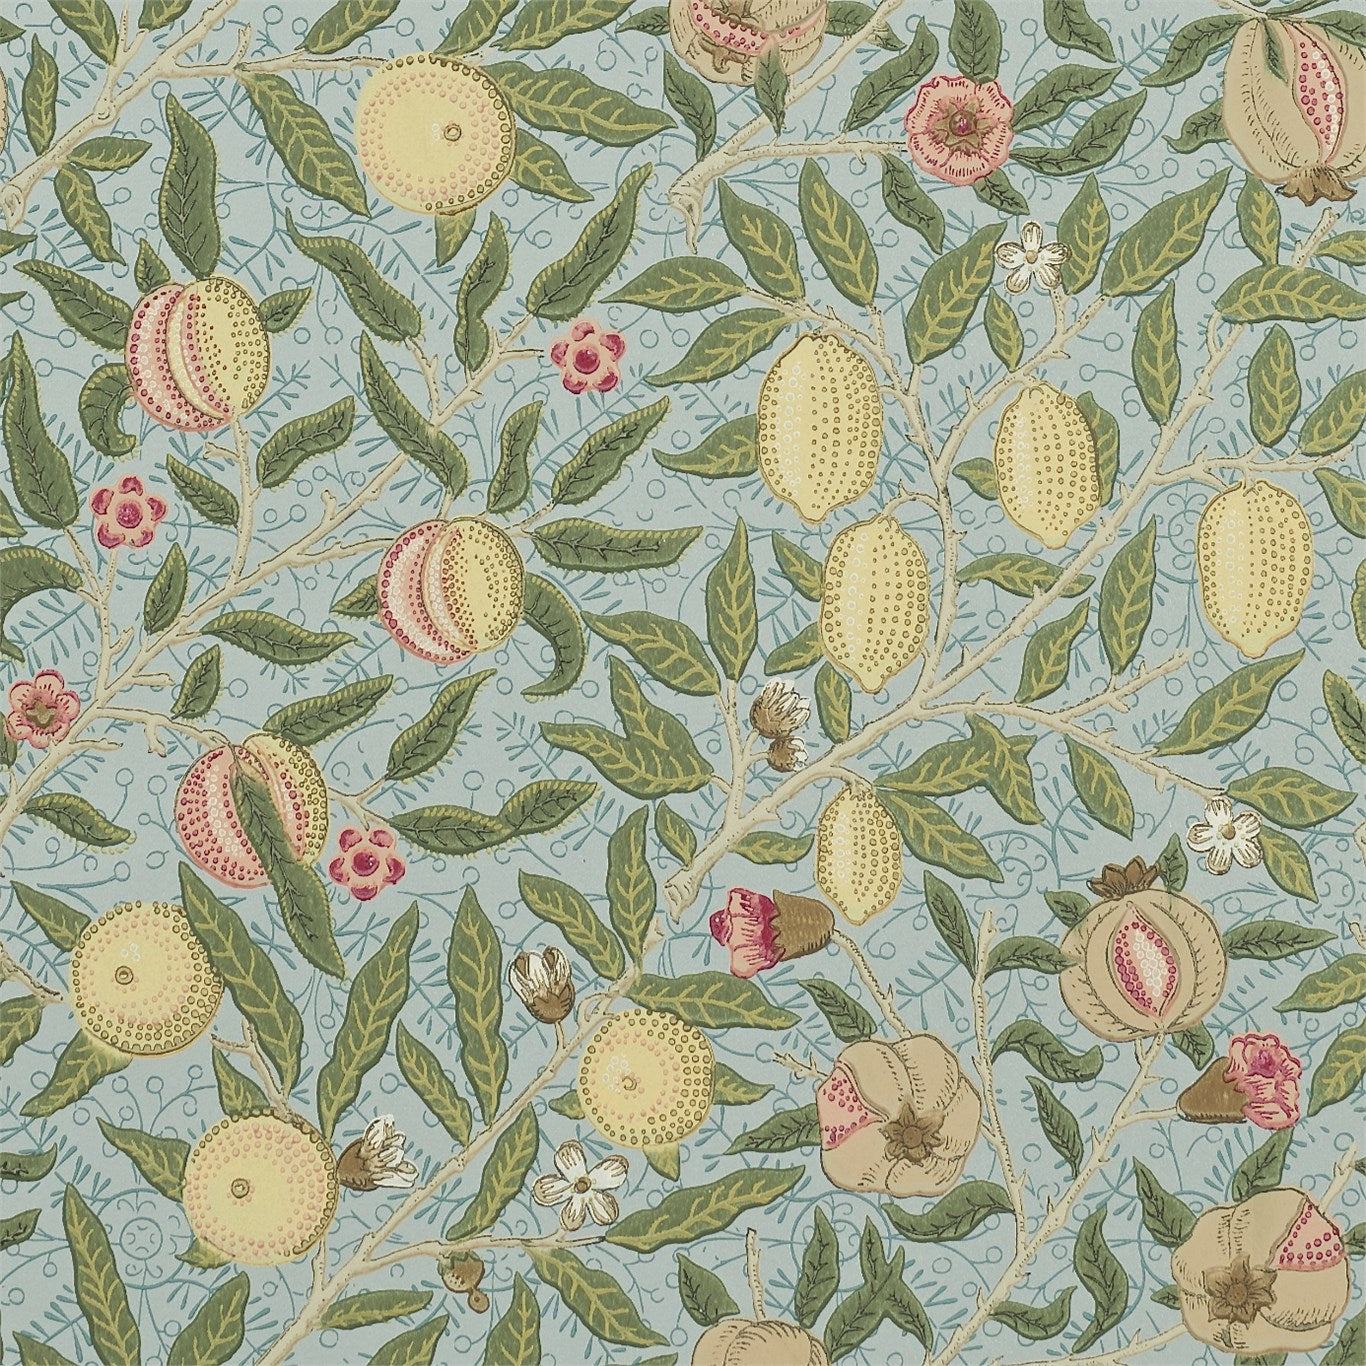 William Morris Apple Wallpaper Design. Remastered Vintage Art - Etsy